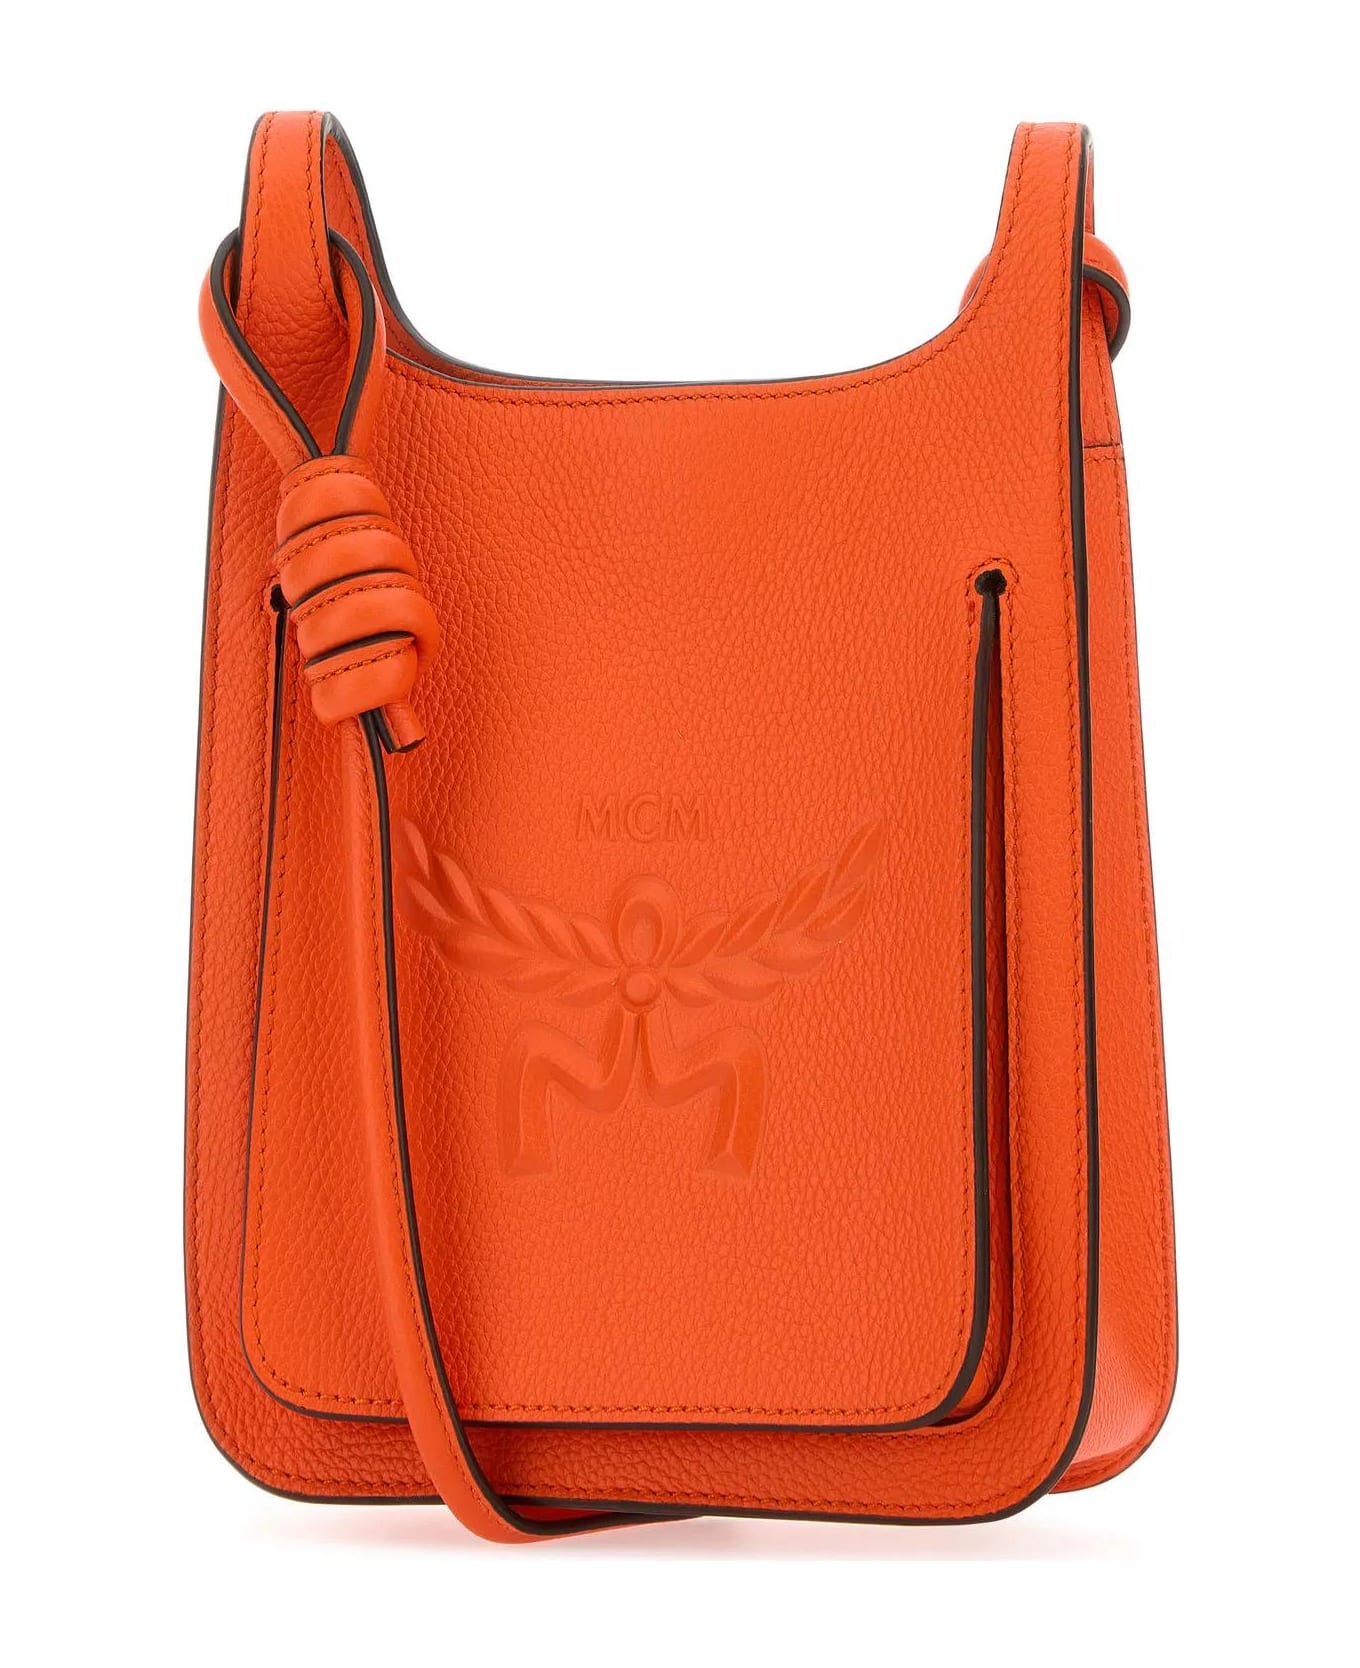 MCM Dark Orange Leather Mini Himmel Hobo Crossbody Bag - ORANGE